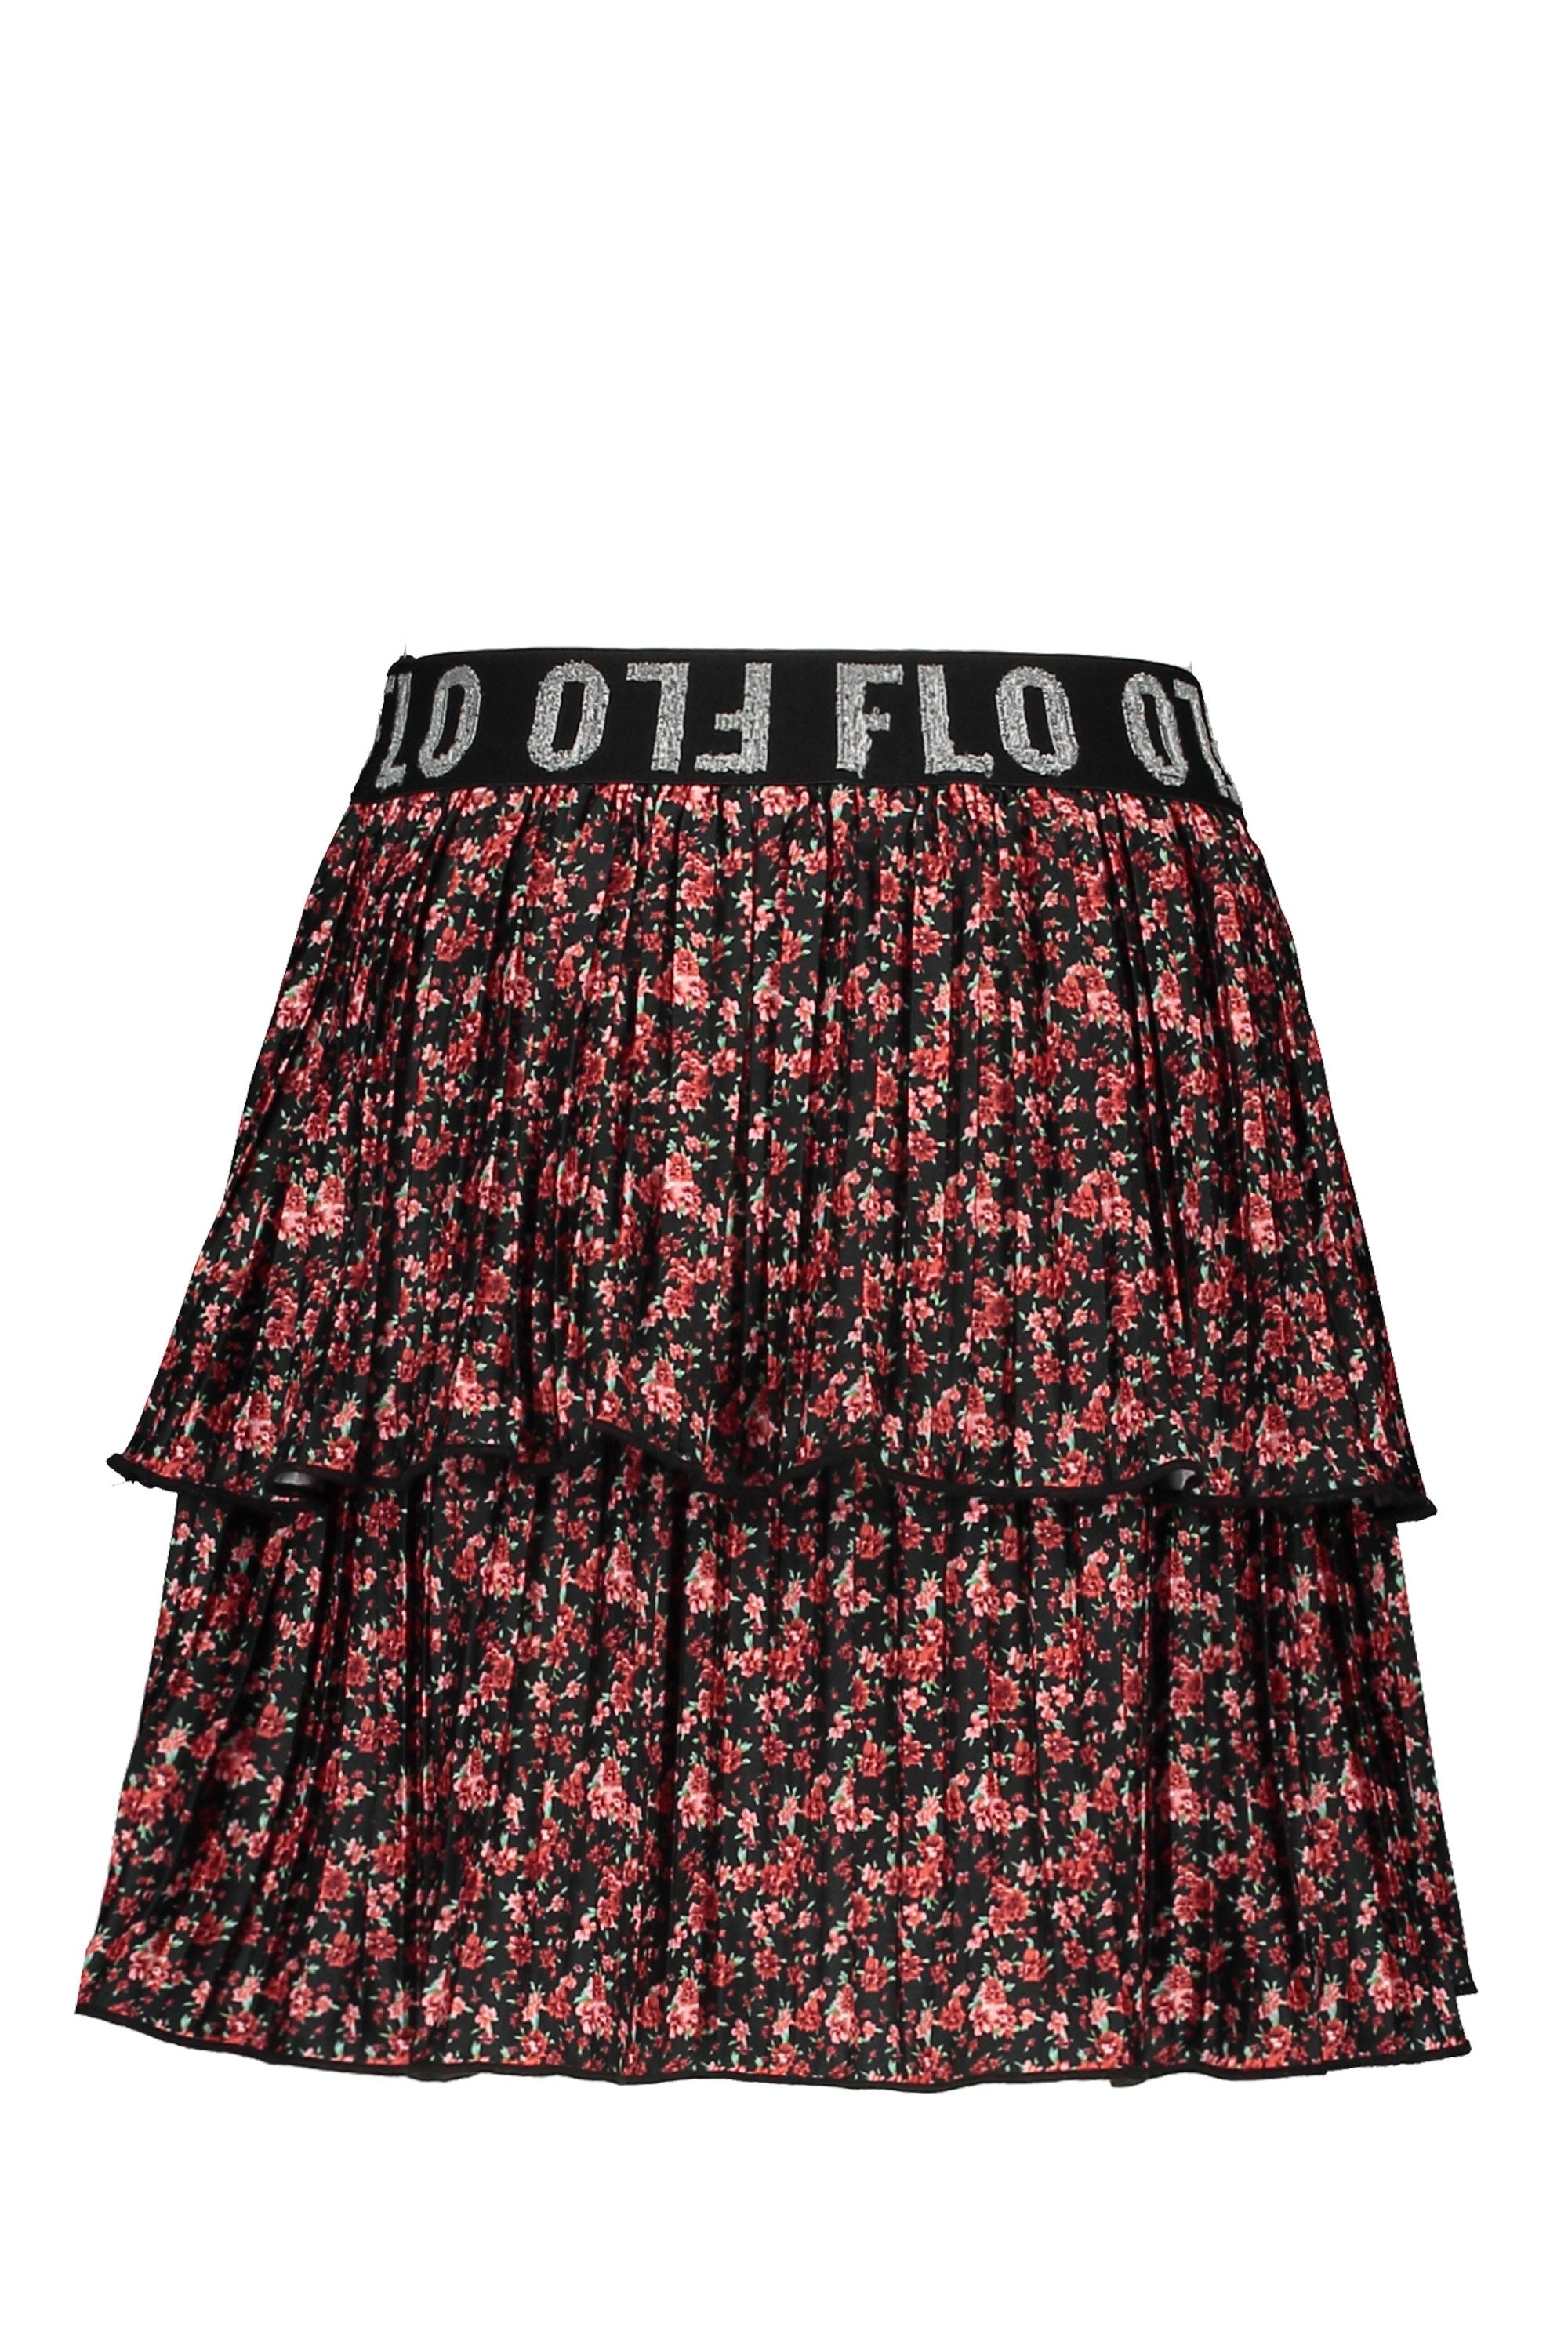 Meisjes Flo girls AO shiny jersey plisse skirt 2 layer van Flo in de kleur Flower in maat 152.